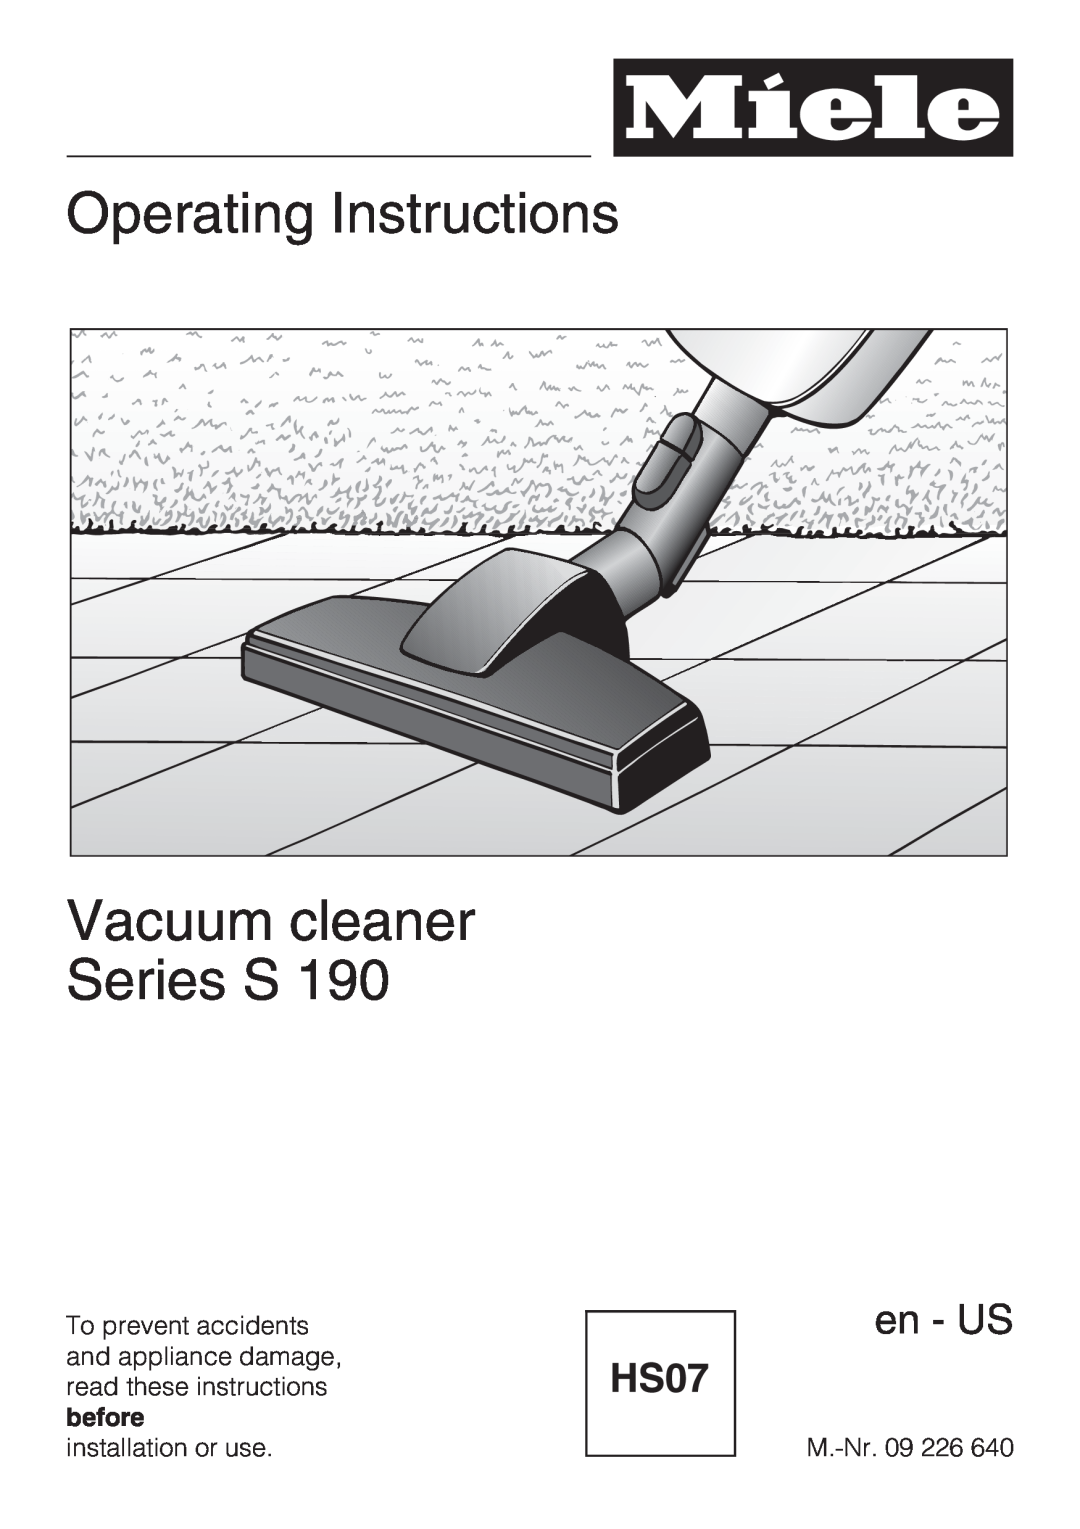 Miele S 190 manual Operating Instructions Vacuum cleaner Series S, en - US 